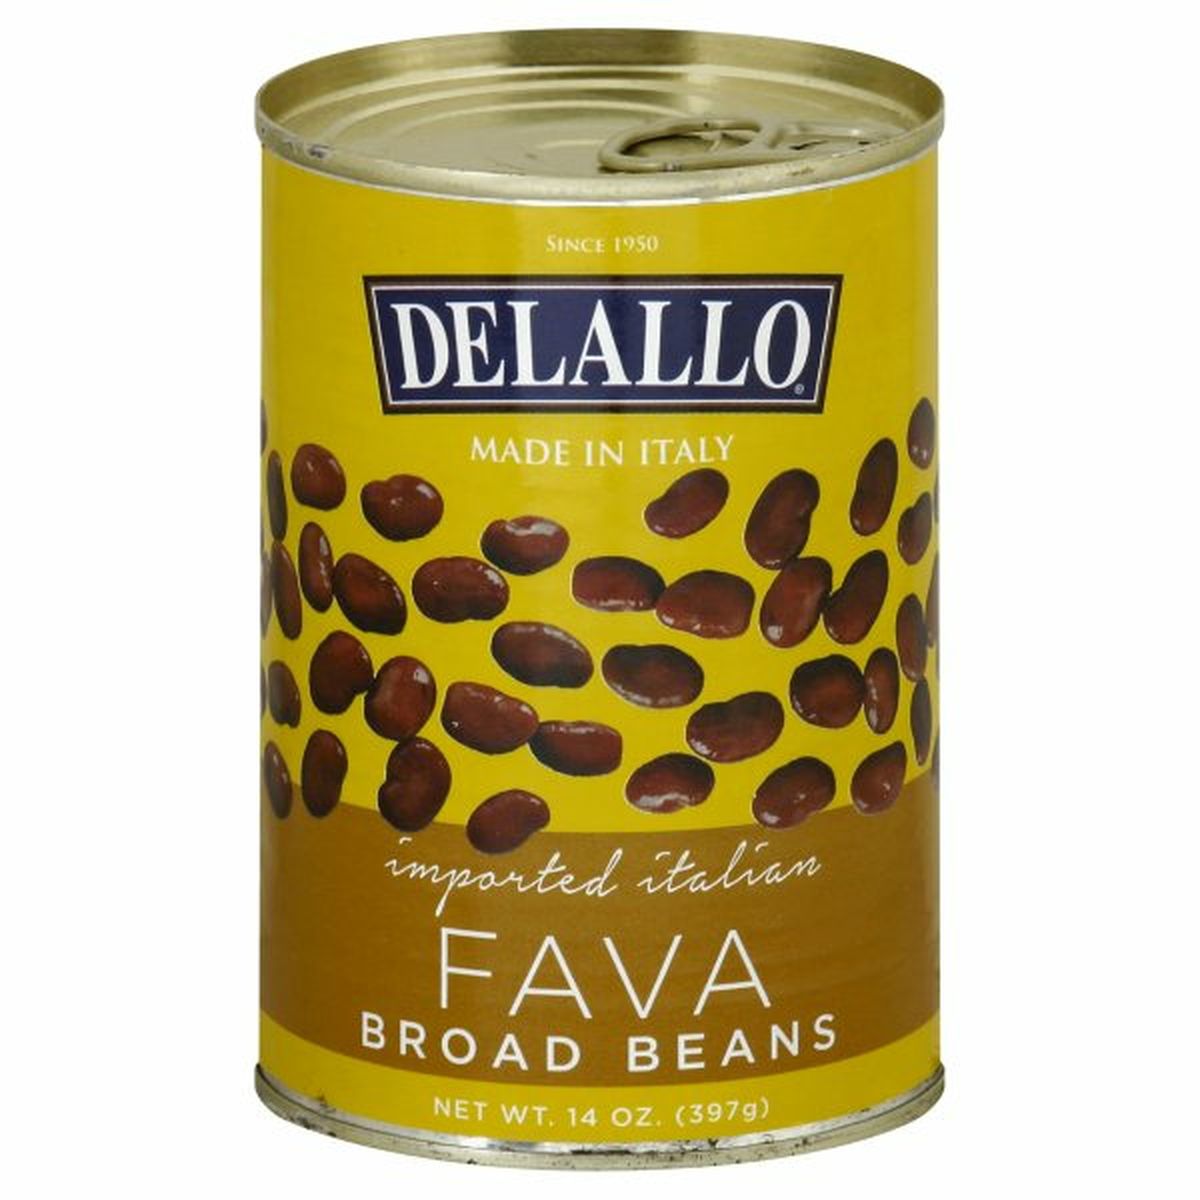 Calories in DeLallo Broad Beans, Fava